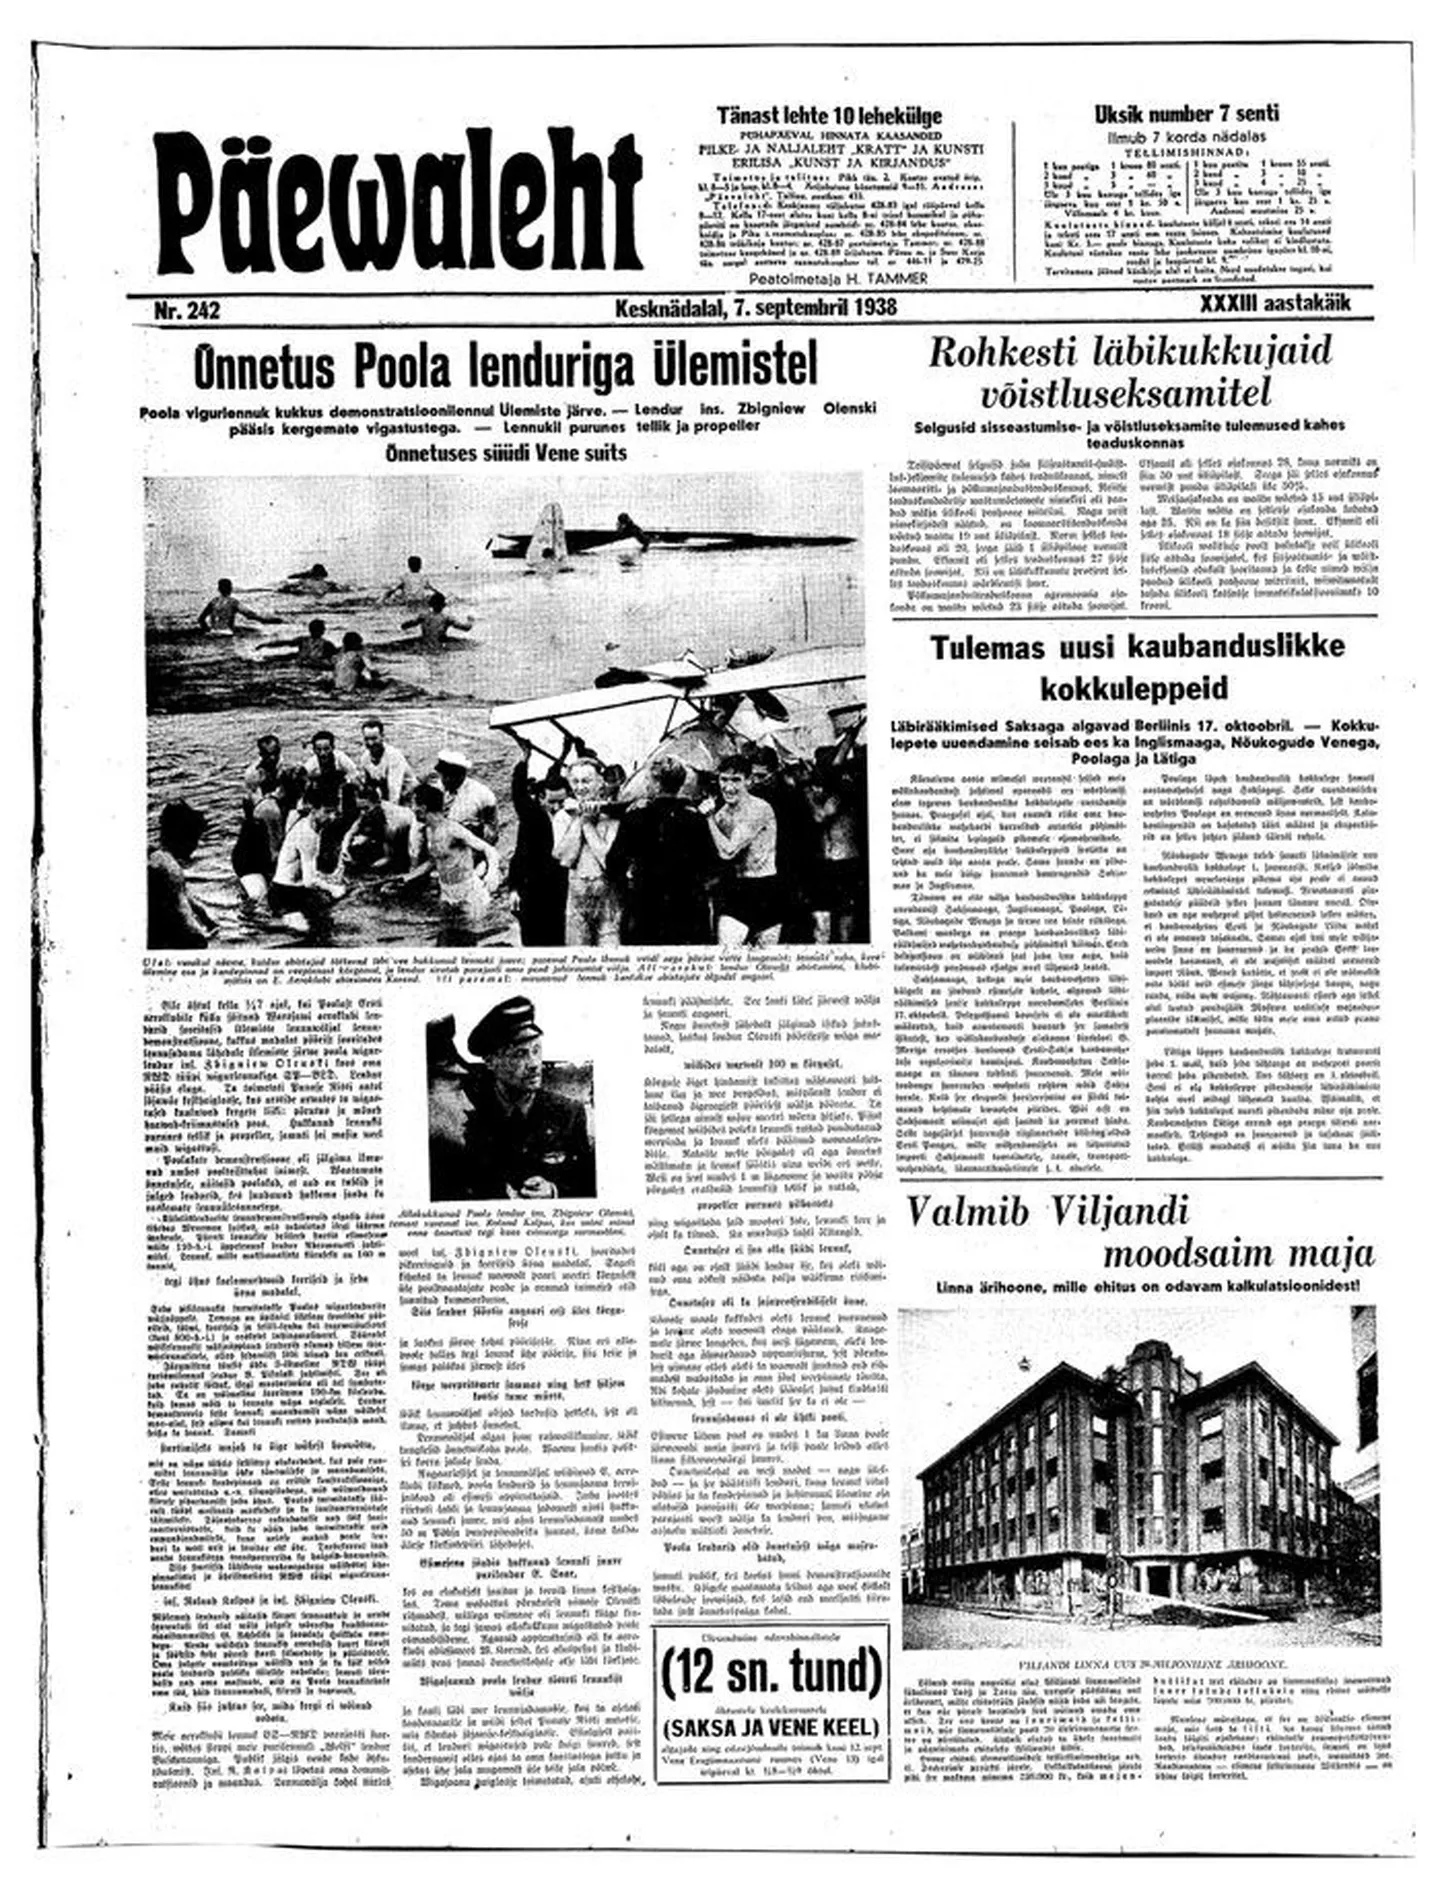 "Пяевалехт" от 7 сентября 1938г.